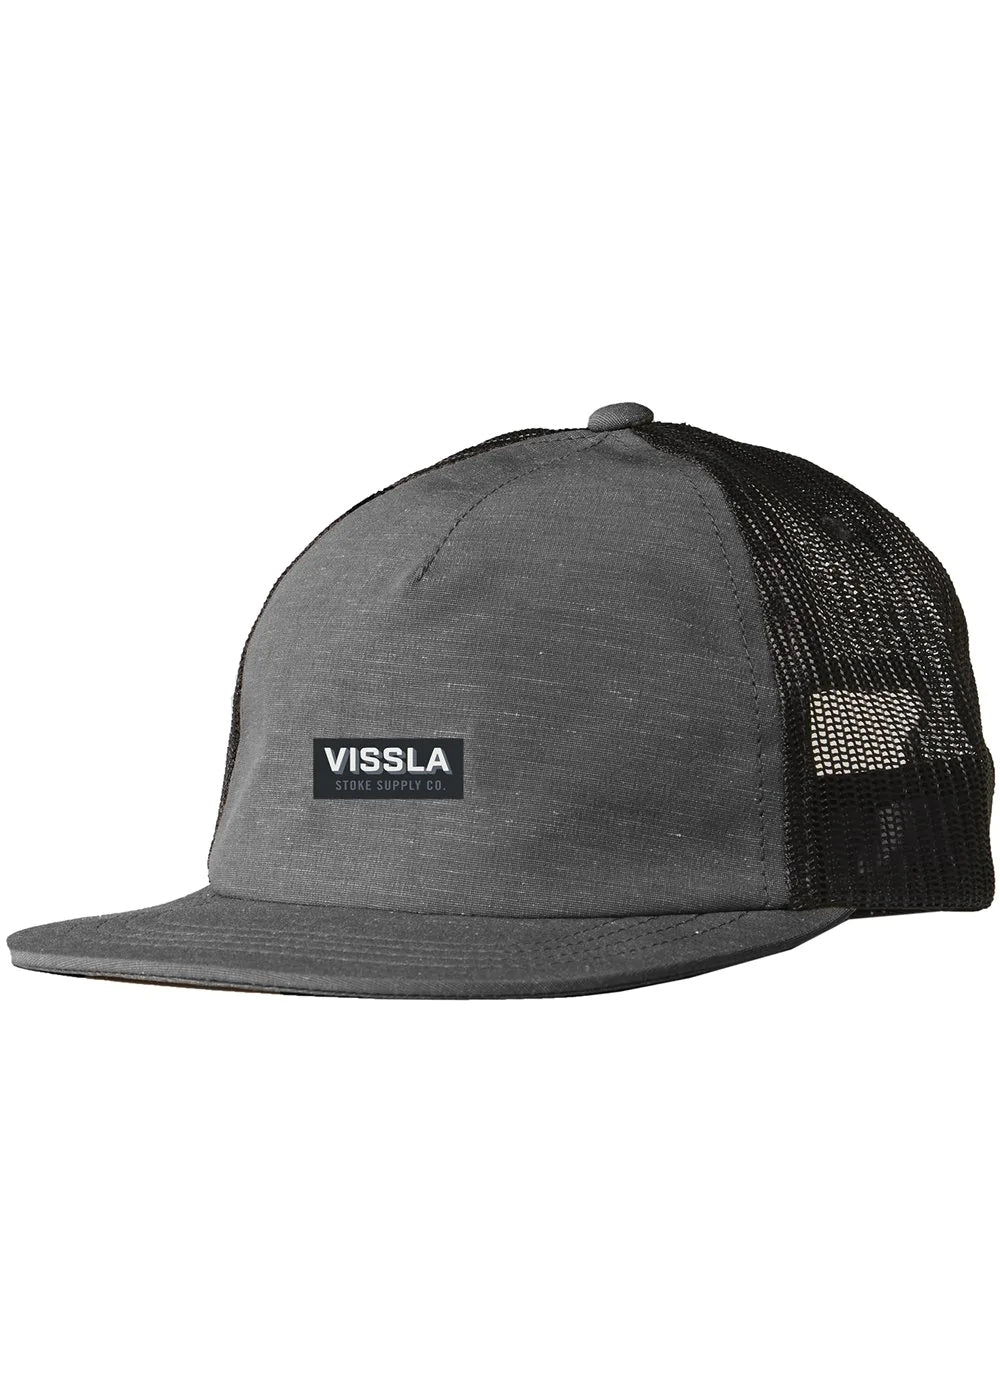 Vissla Lay Day Eco Trucker II Hat